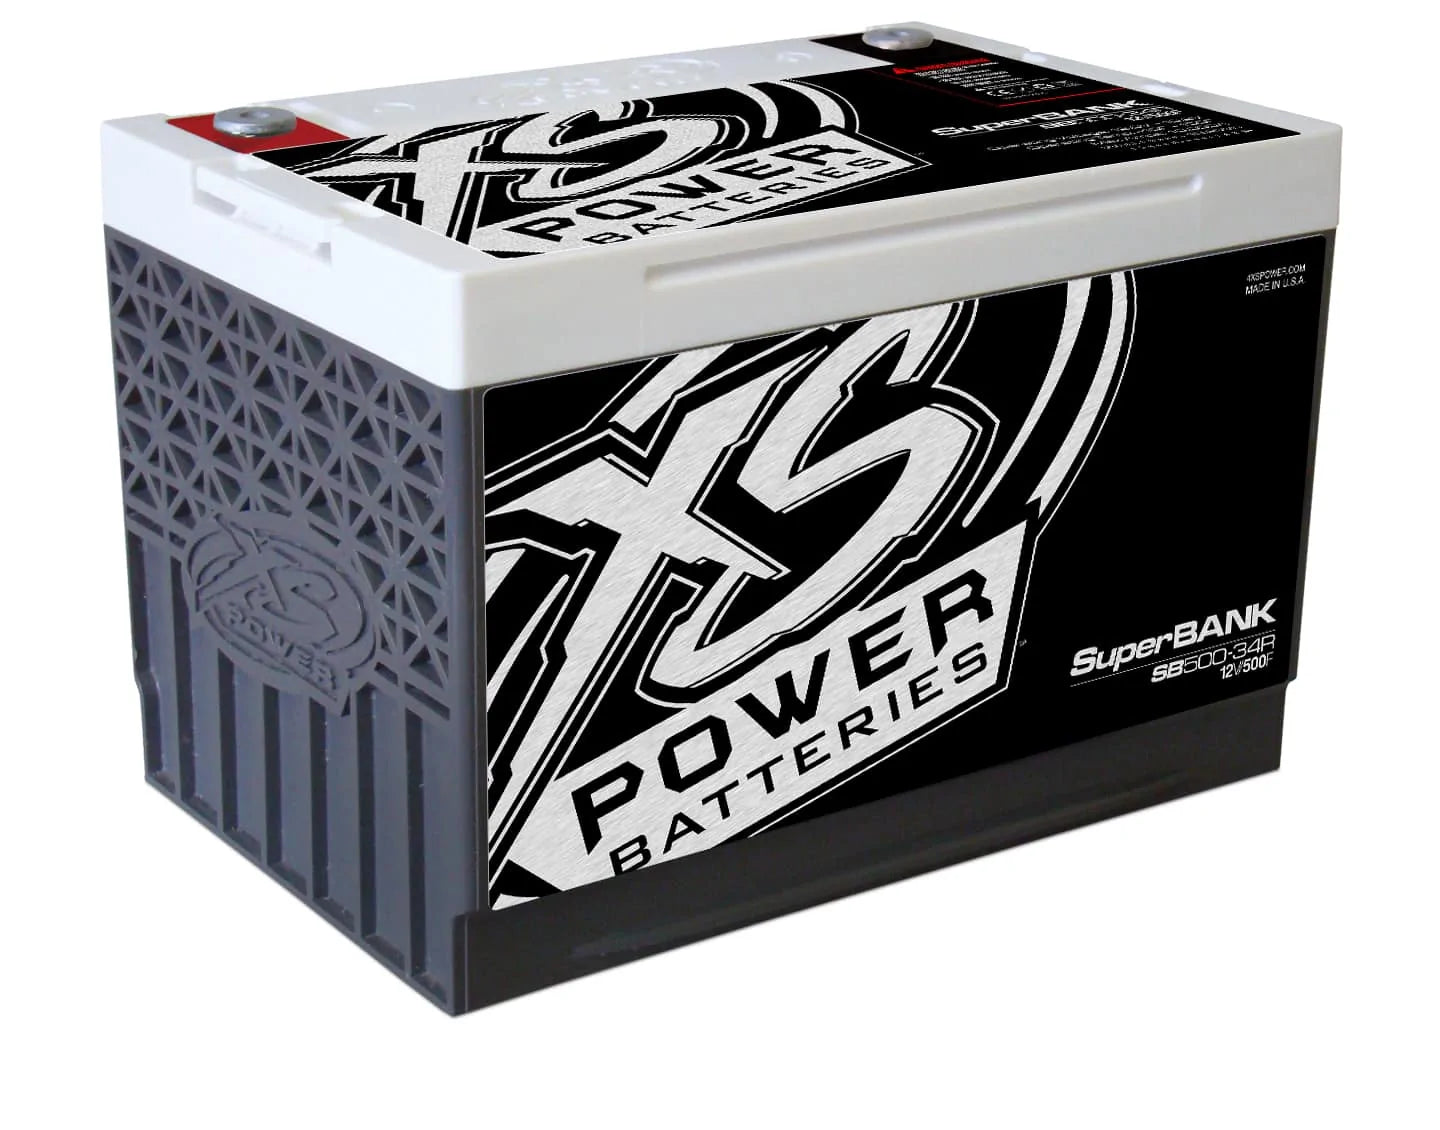 SB500-34R XS Power 500F SuperBank 12V Ultracapacitors Group 34R